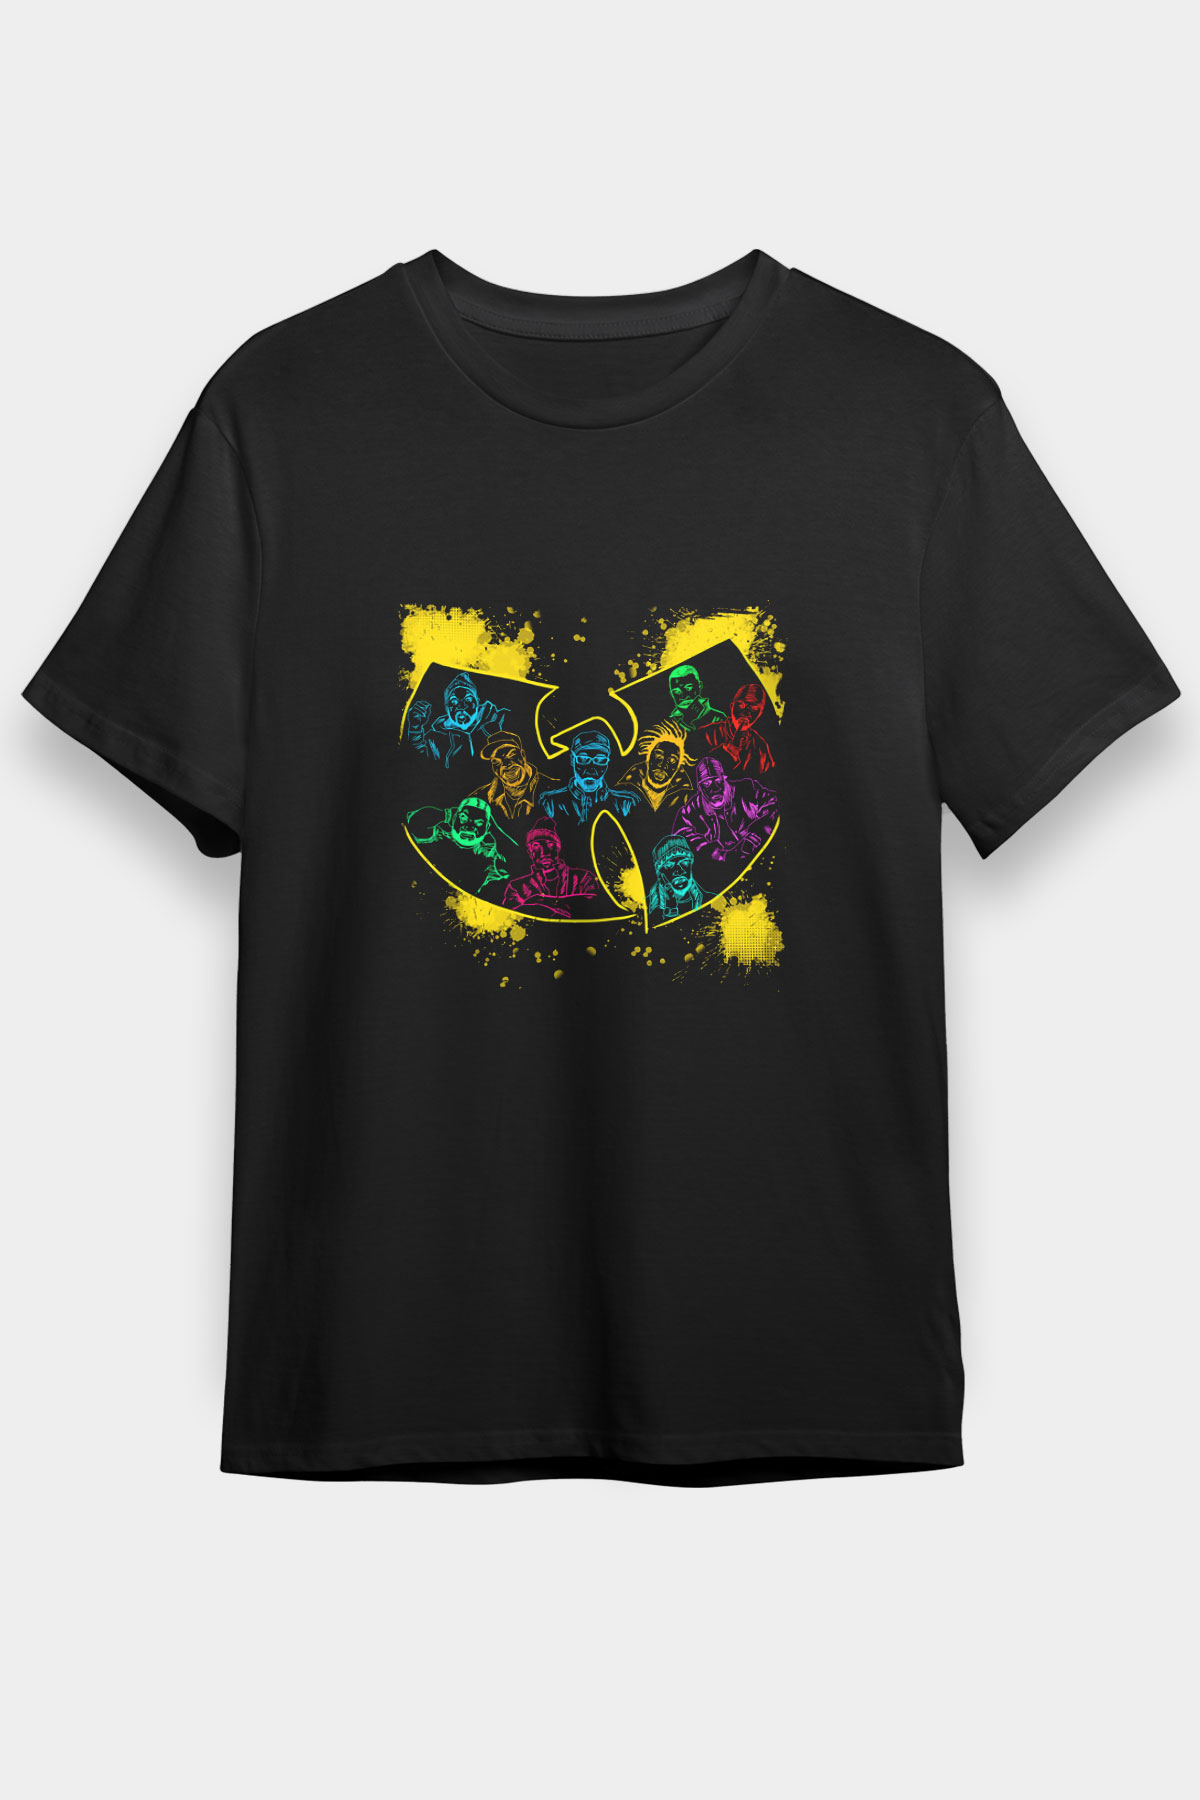 Wu-Tang Clan T shirt,Hip Hop,Rap Tshirt 04